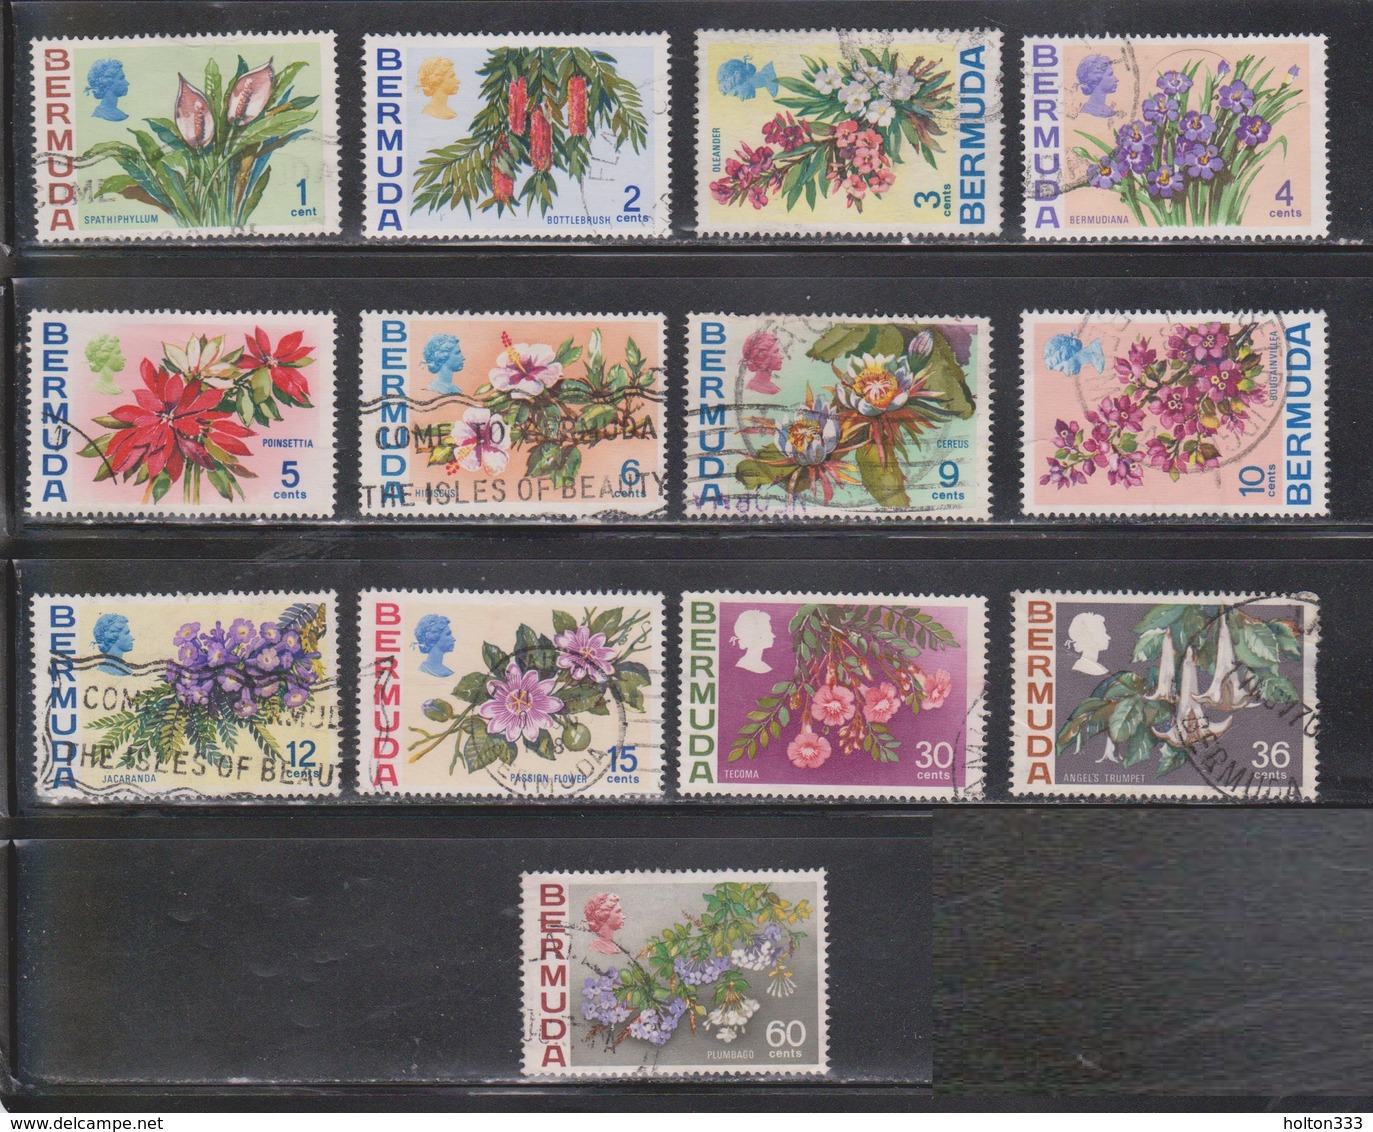 BERMUDA Scott # 255//69 Used - Flowers - Not Full Set - Bermuda